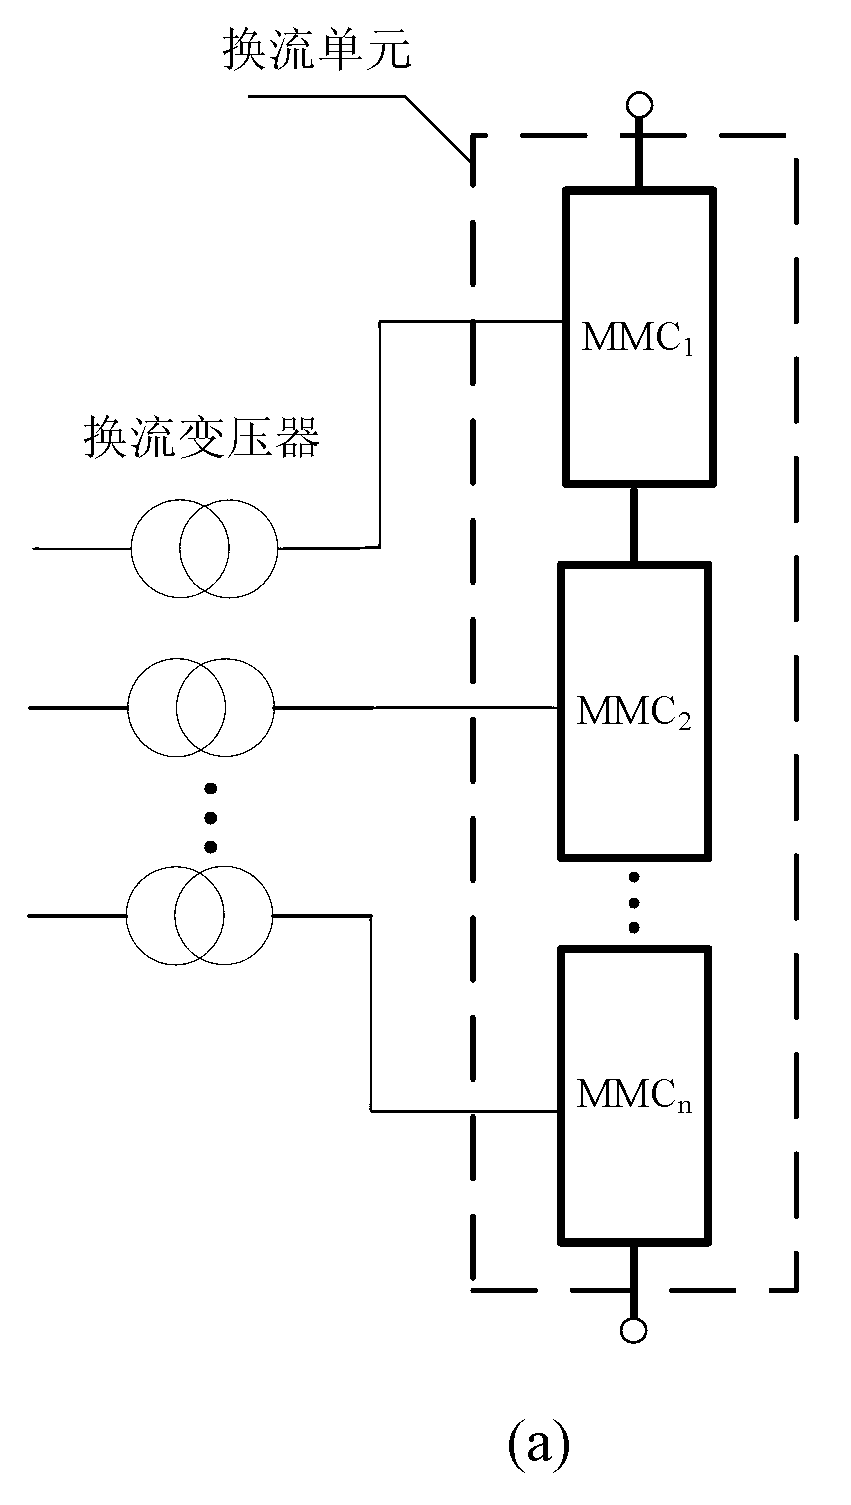 Direct-current converter station based on bipolar structure